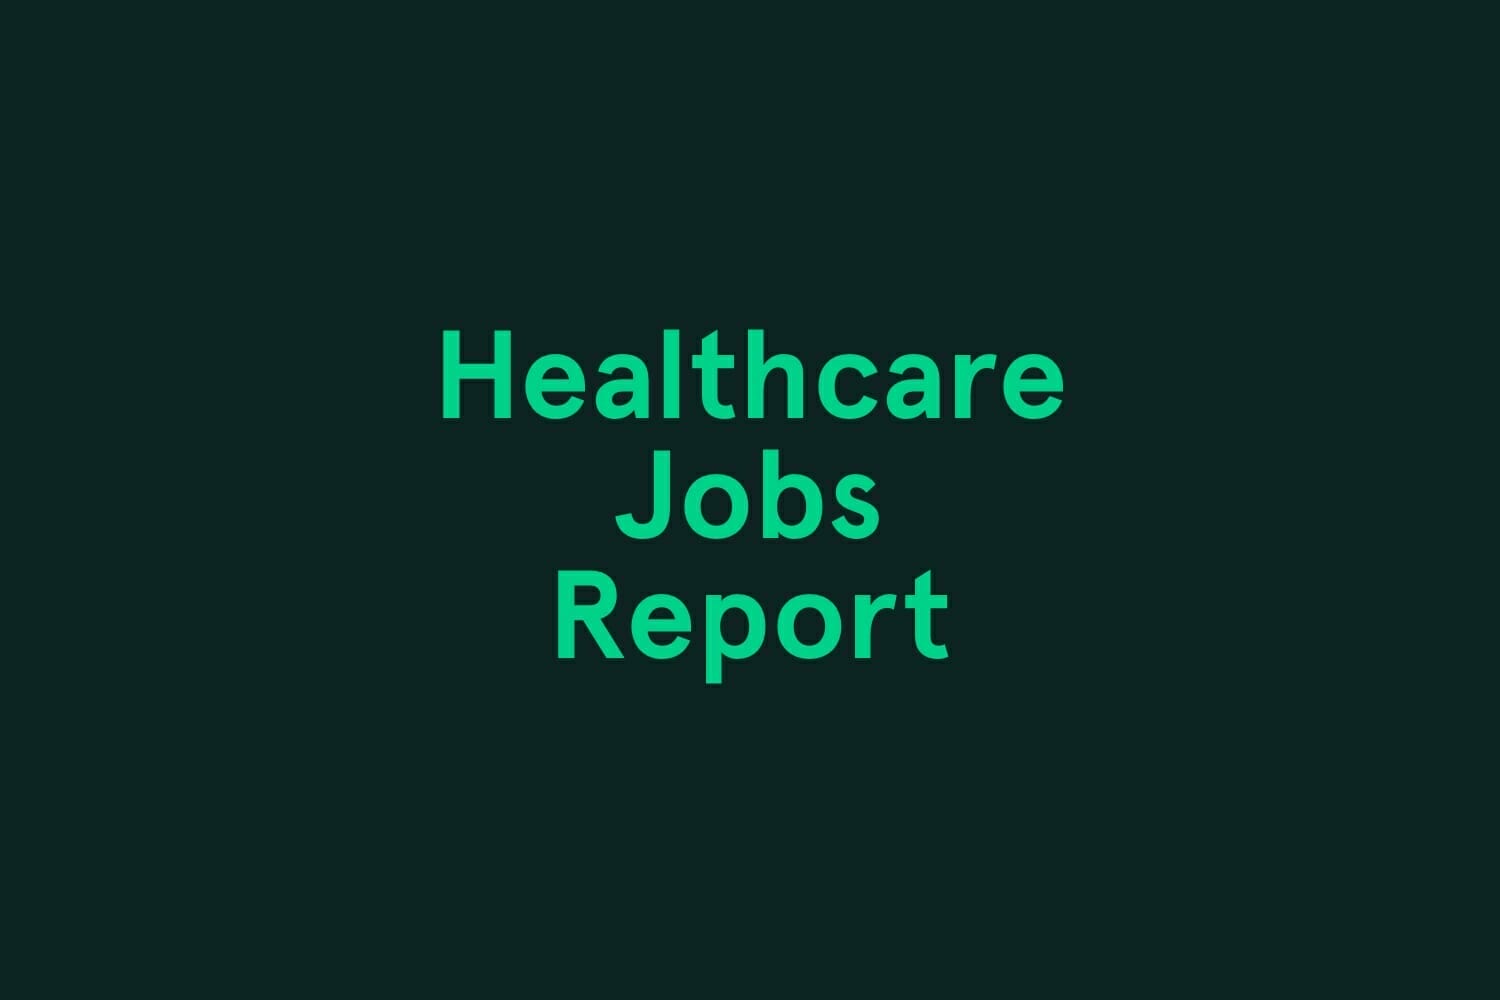 August Healthcare Jobs Report Infographic